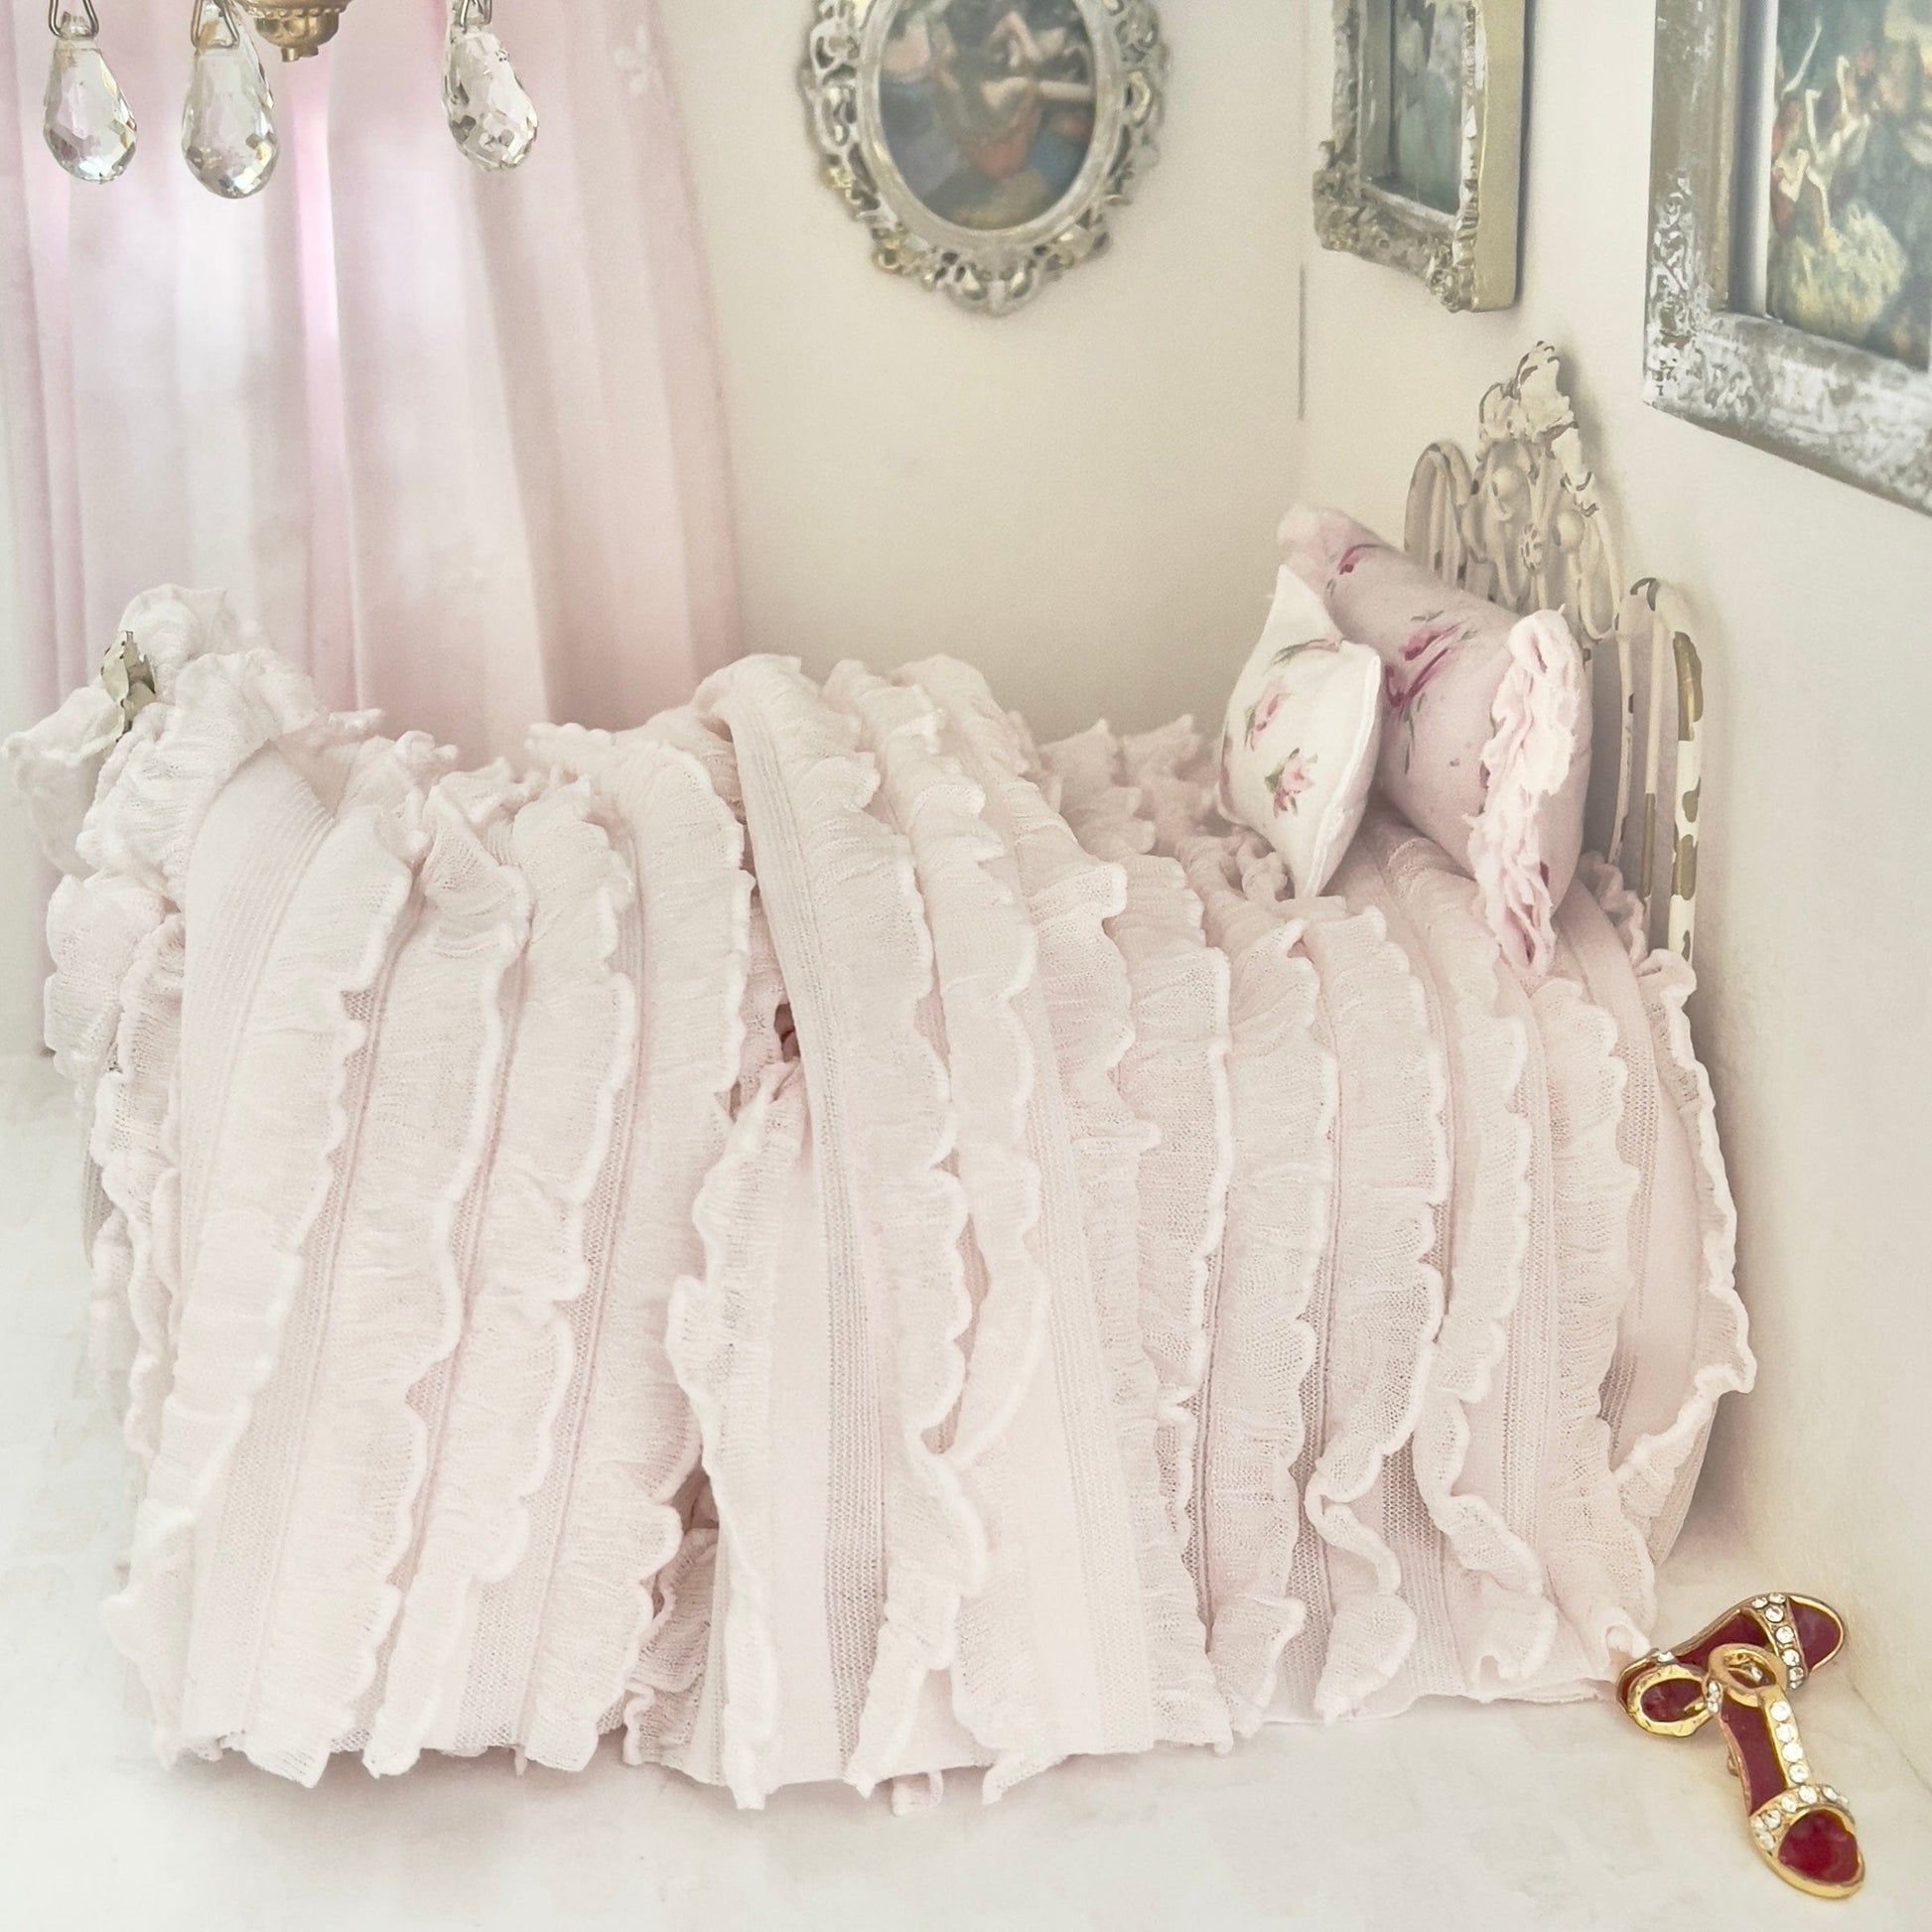 CHANTALLENA 3 Pink Ruffled Throws At Home | Romantic Poly Knit Petite Ruffled Cascading Throw